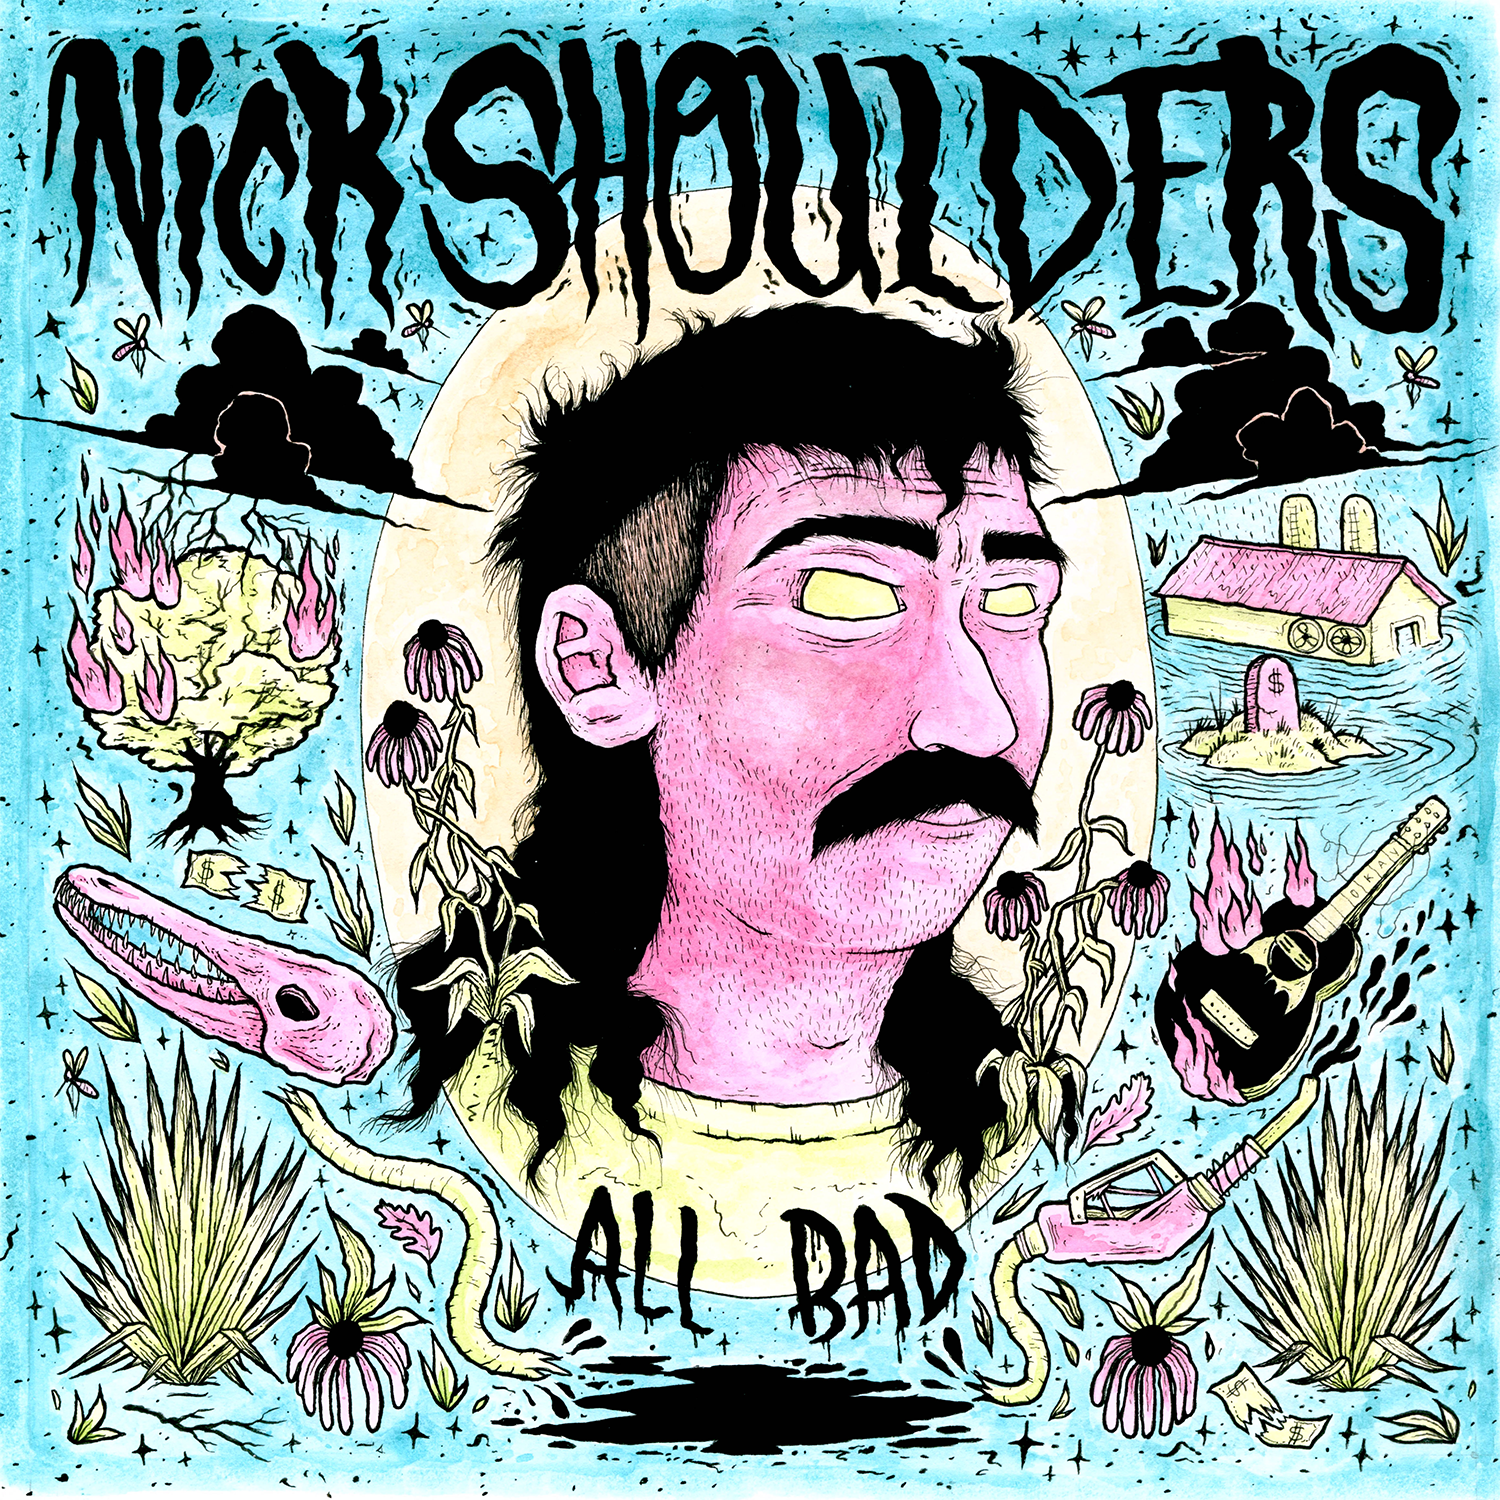 Nick Shoulders - "All Bad" Digital Download